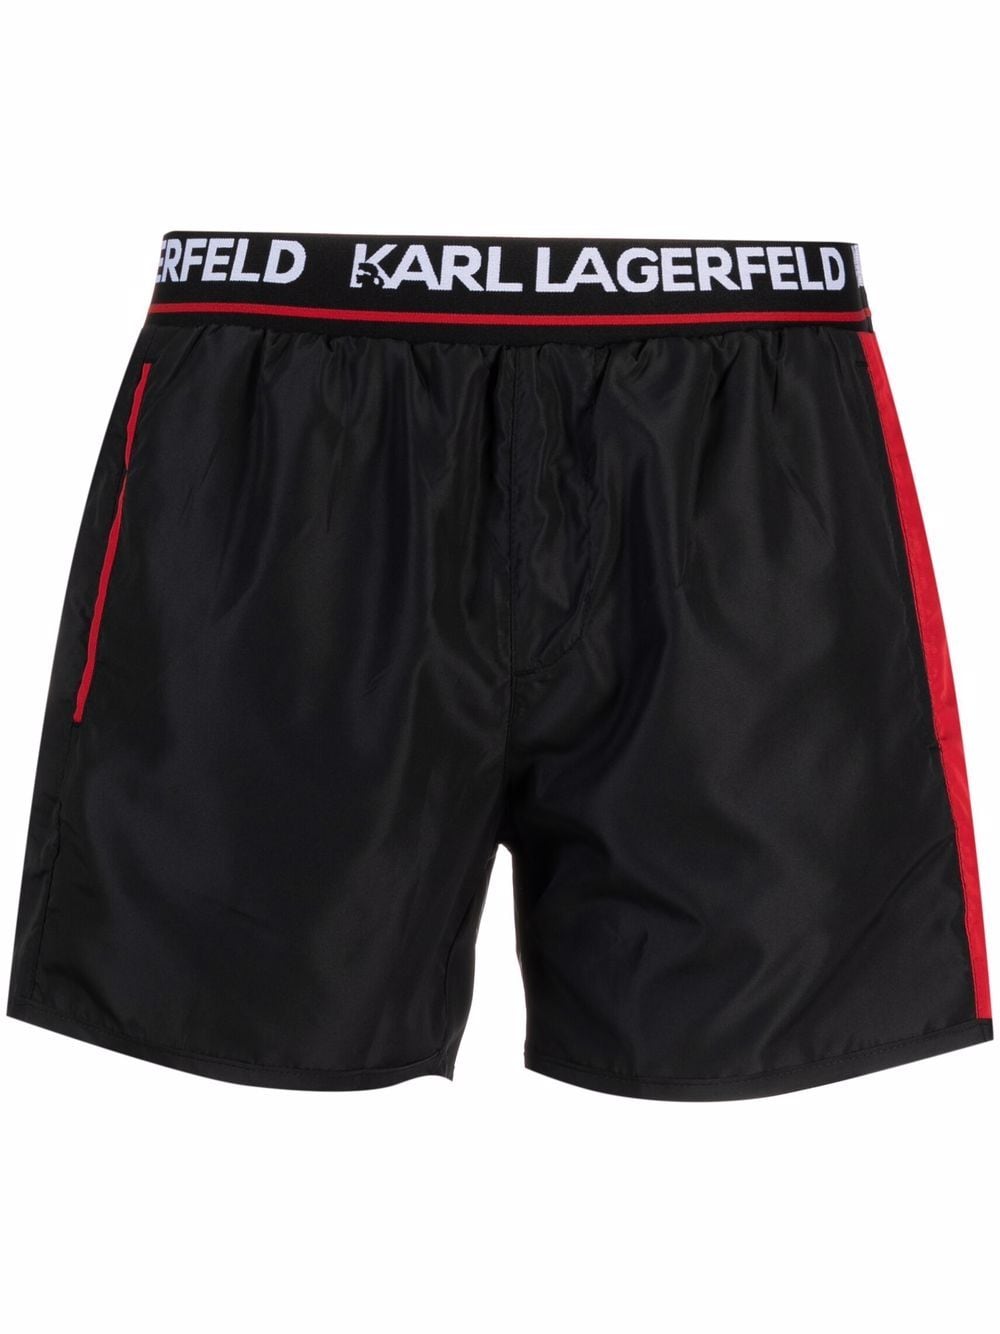 фото Karl lagerfeld плавки-шорты с полосками и логотипом